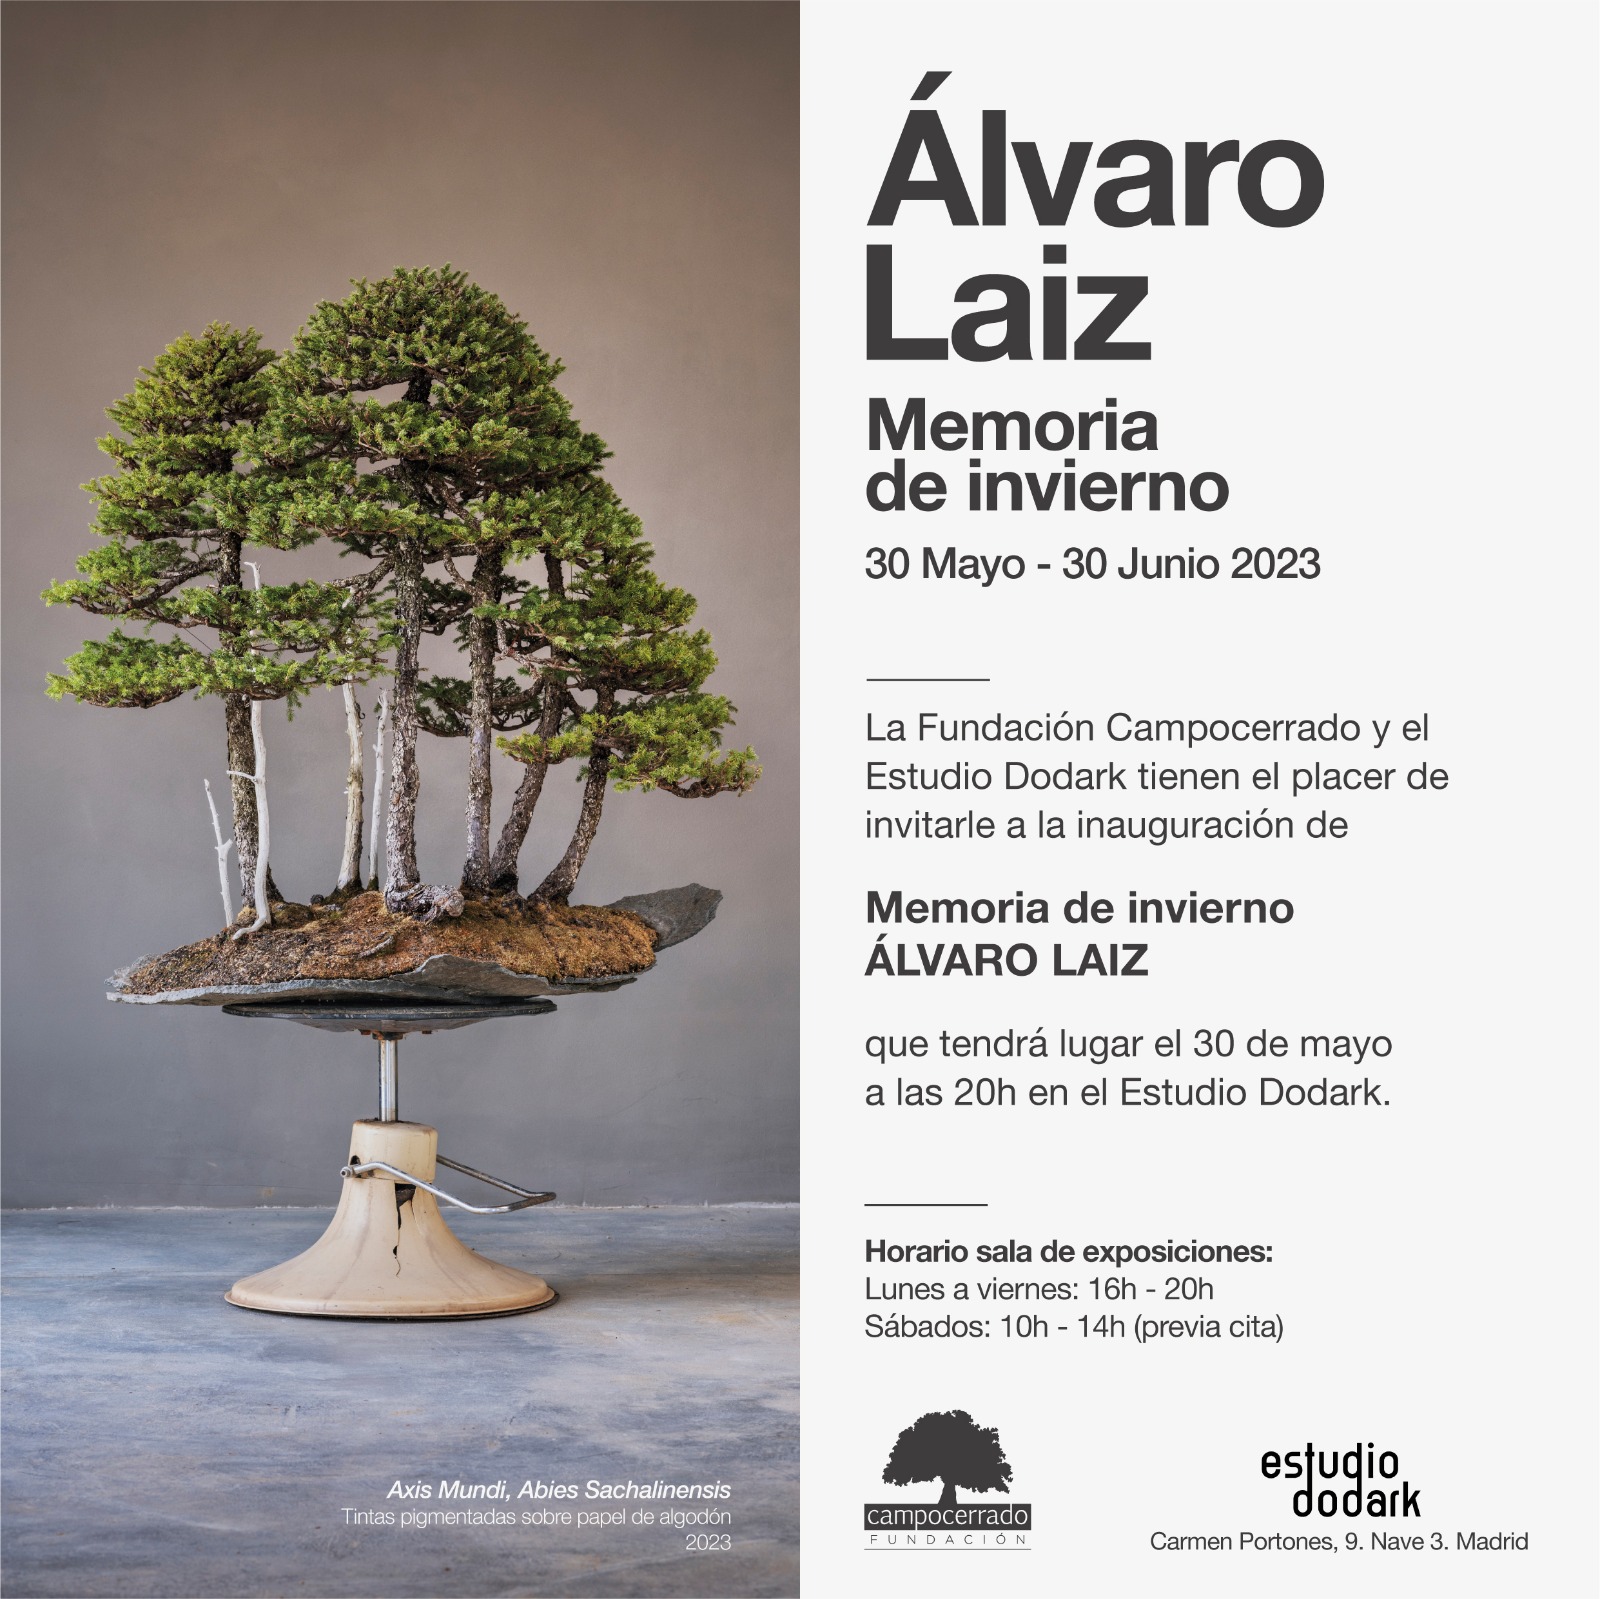 Álvaro Laíz exhibits the project "Memoria de invierno", first grant awarded by the Campocerrado Foundation.